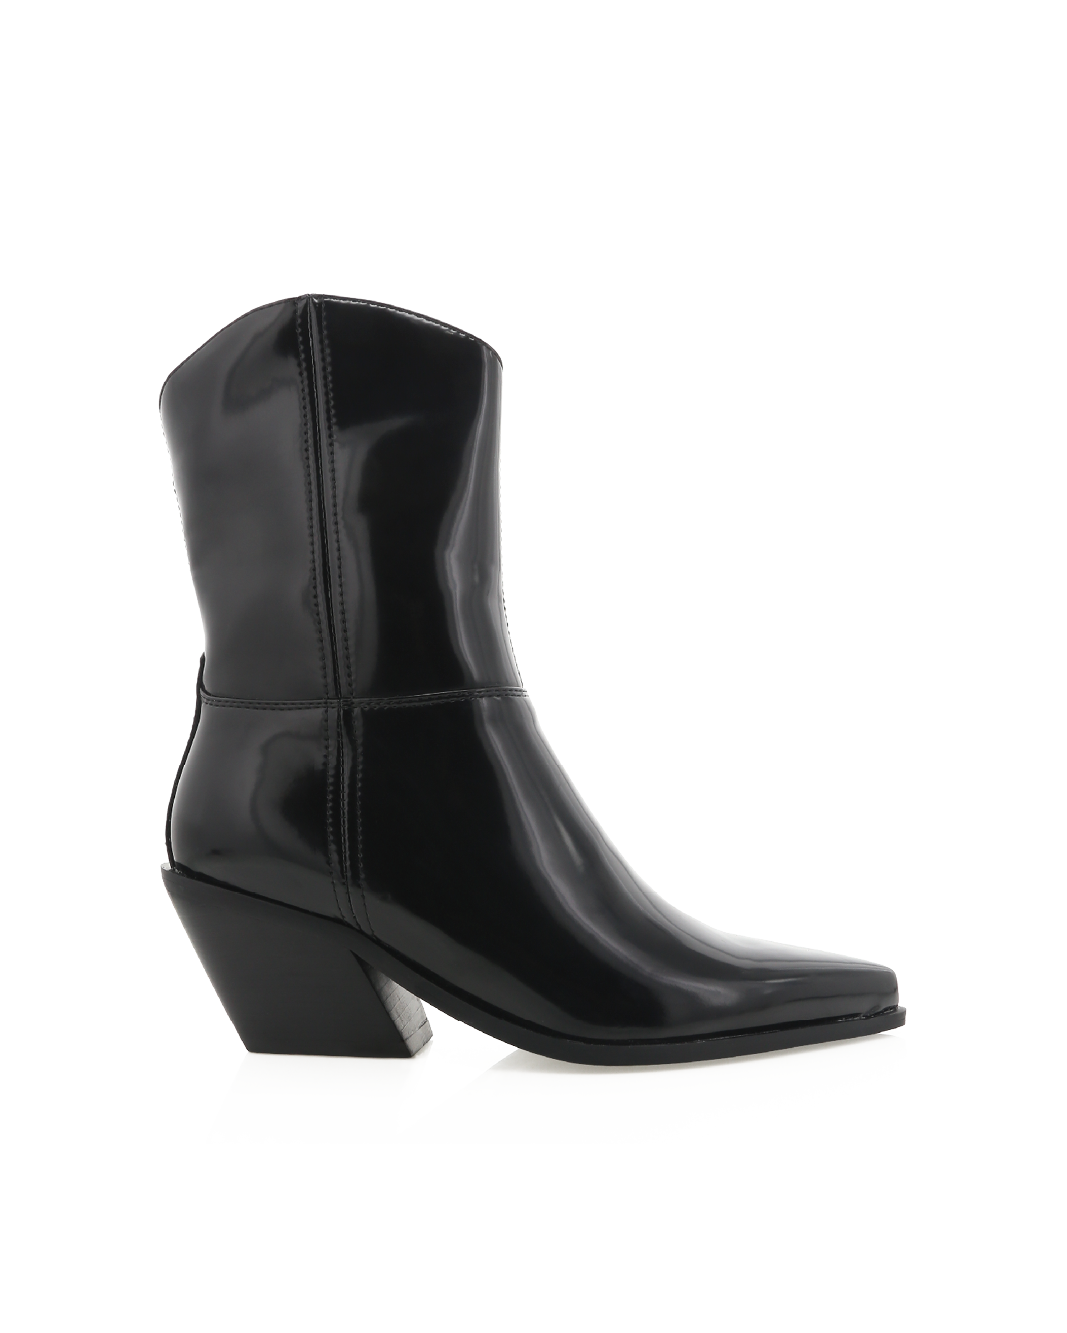 PERRIE - BLACK SEMI PATENT-Boots-Billini-BILLINI USA